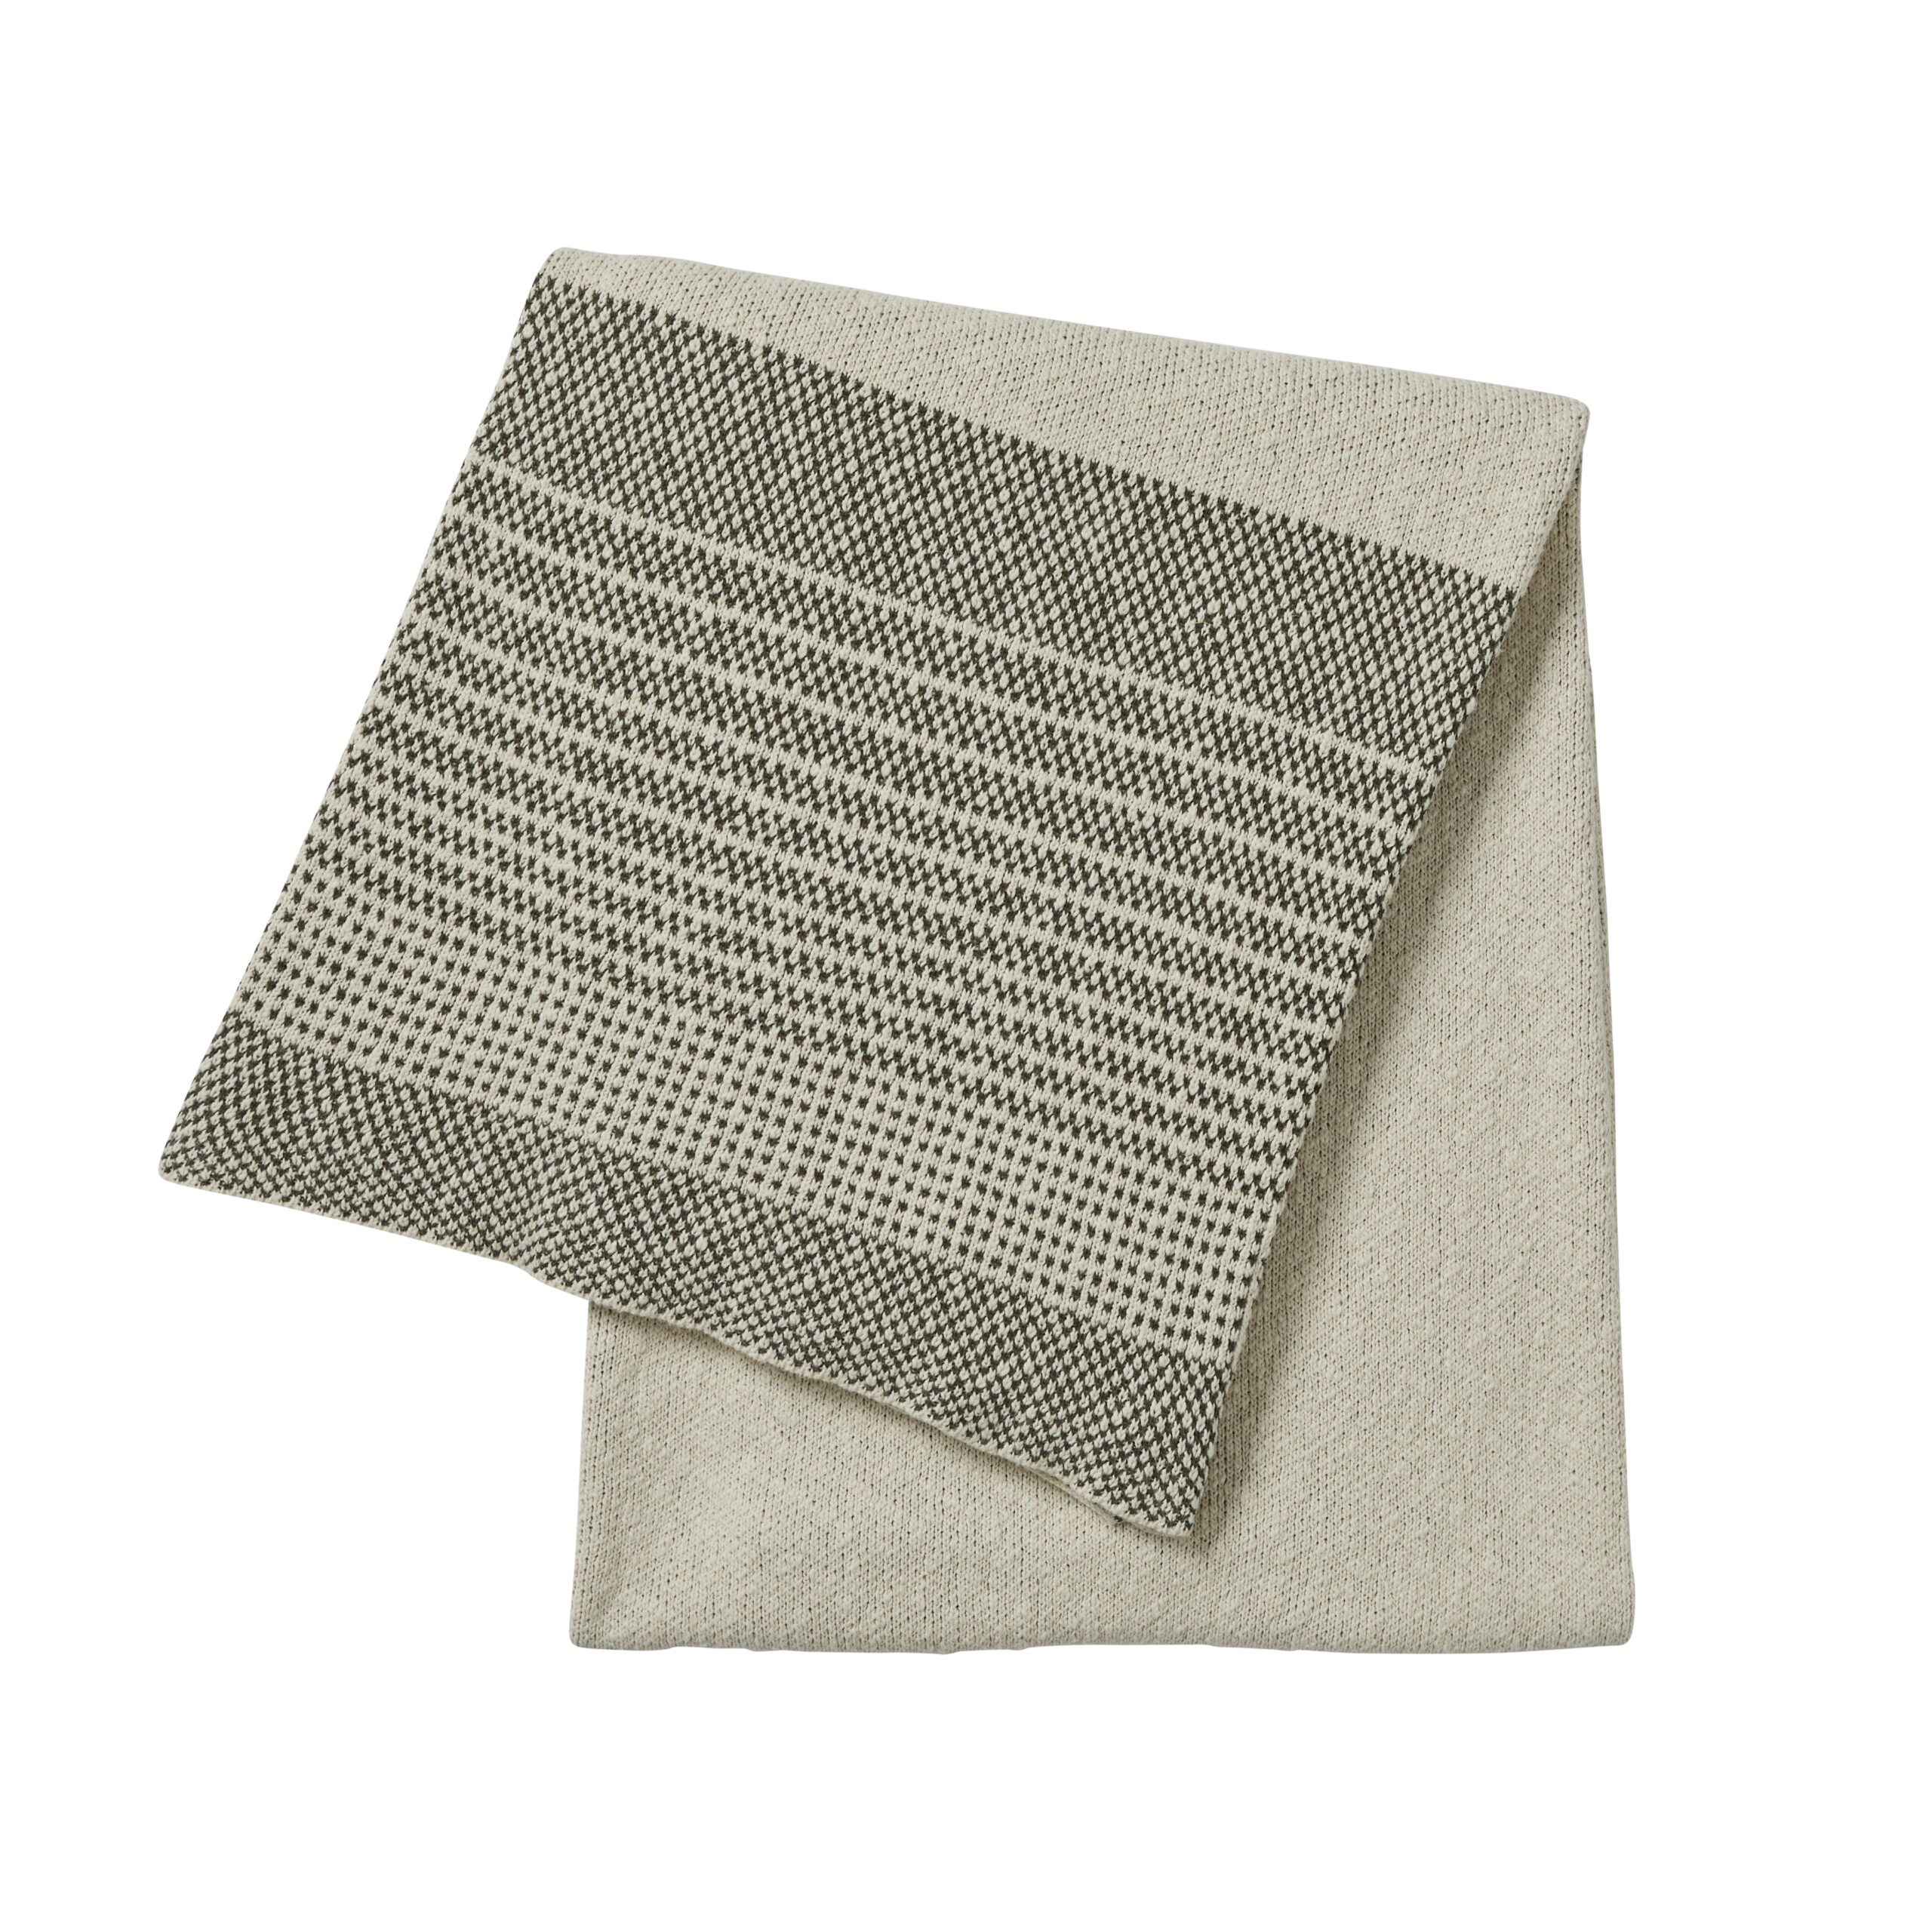 Sonoma Throw - Khaki - By Weave Home - Textured Design Group